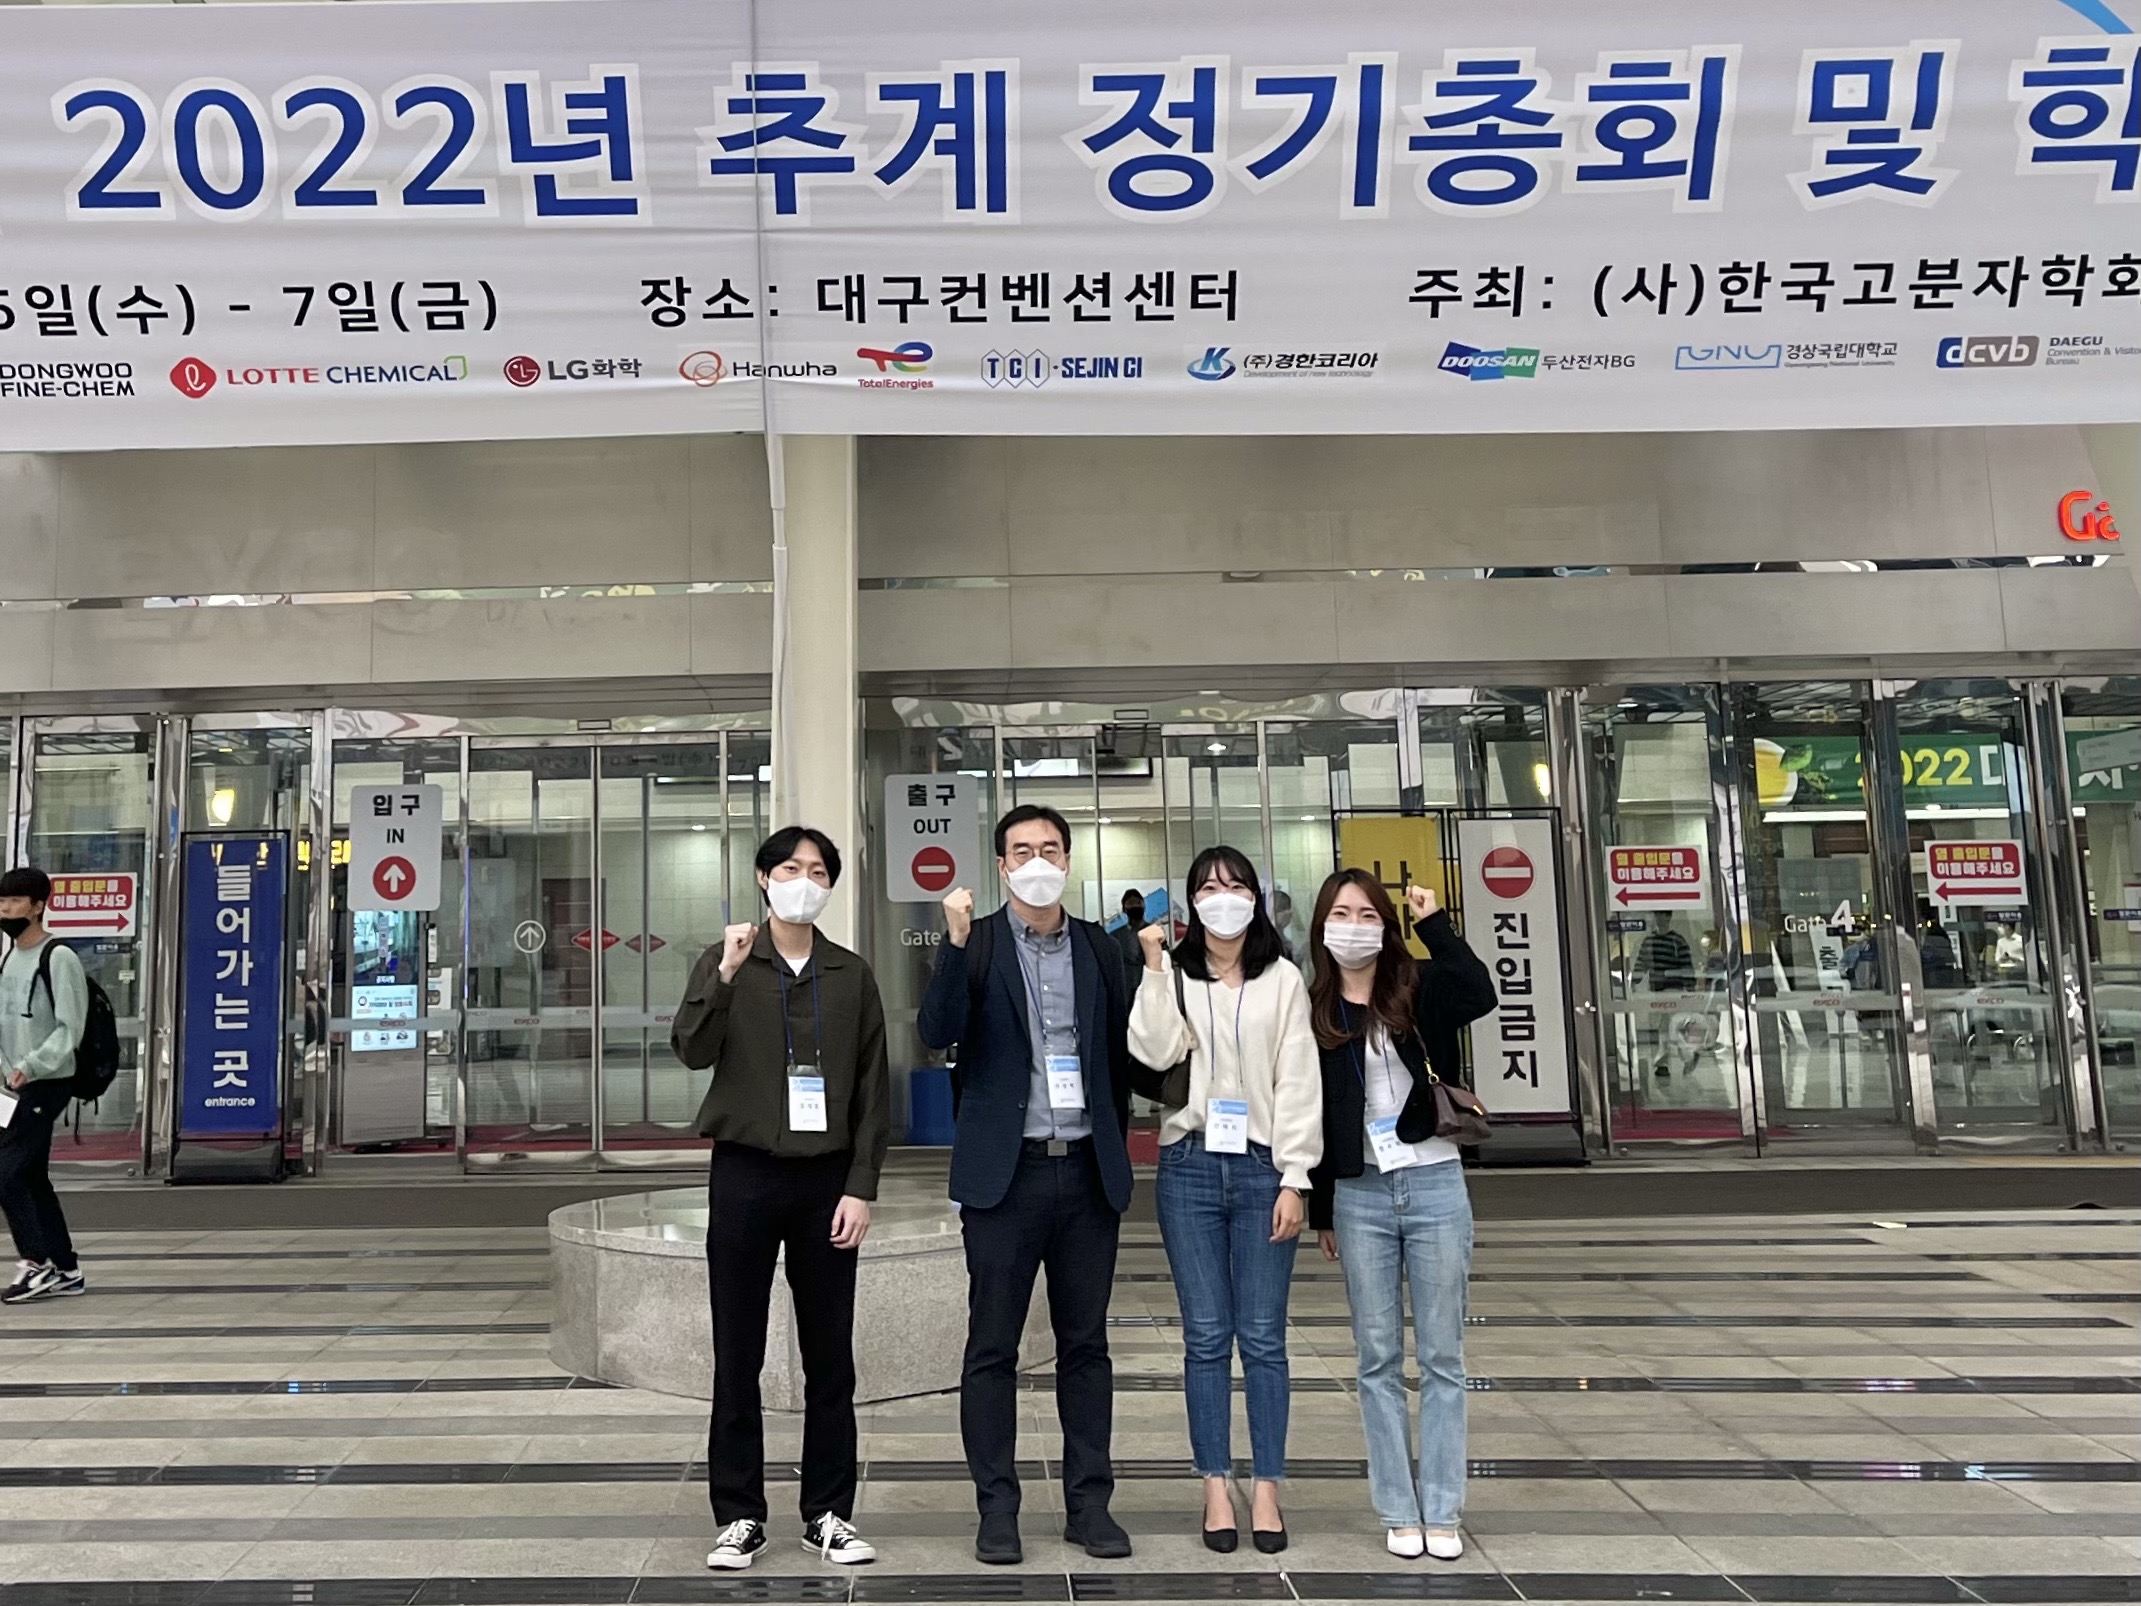 2022 PSK Fall meeting@Daegu 그룹사진.jpg